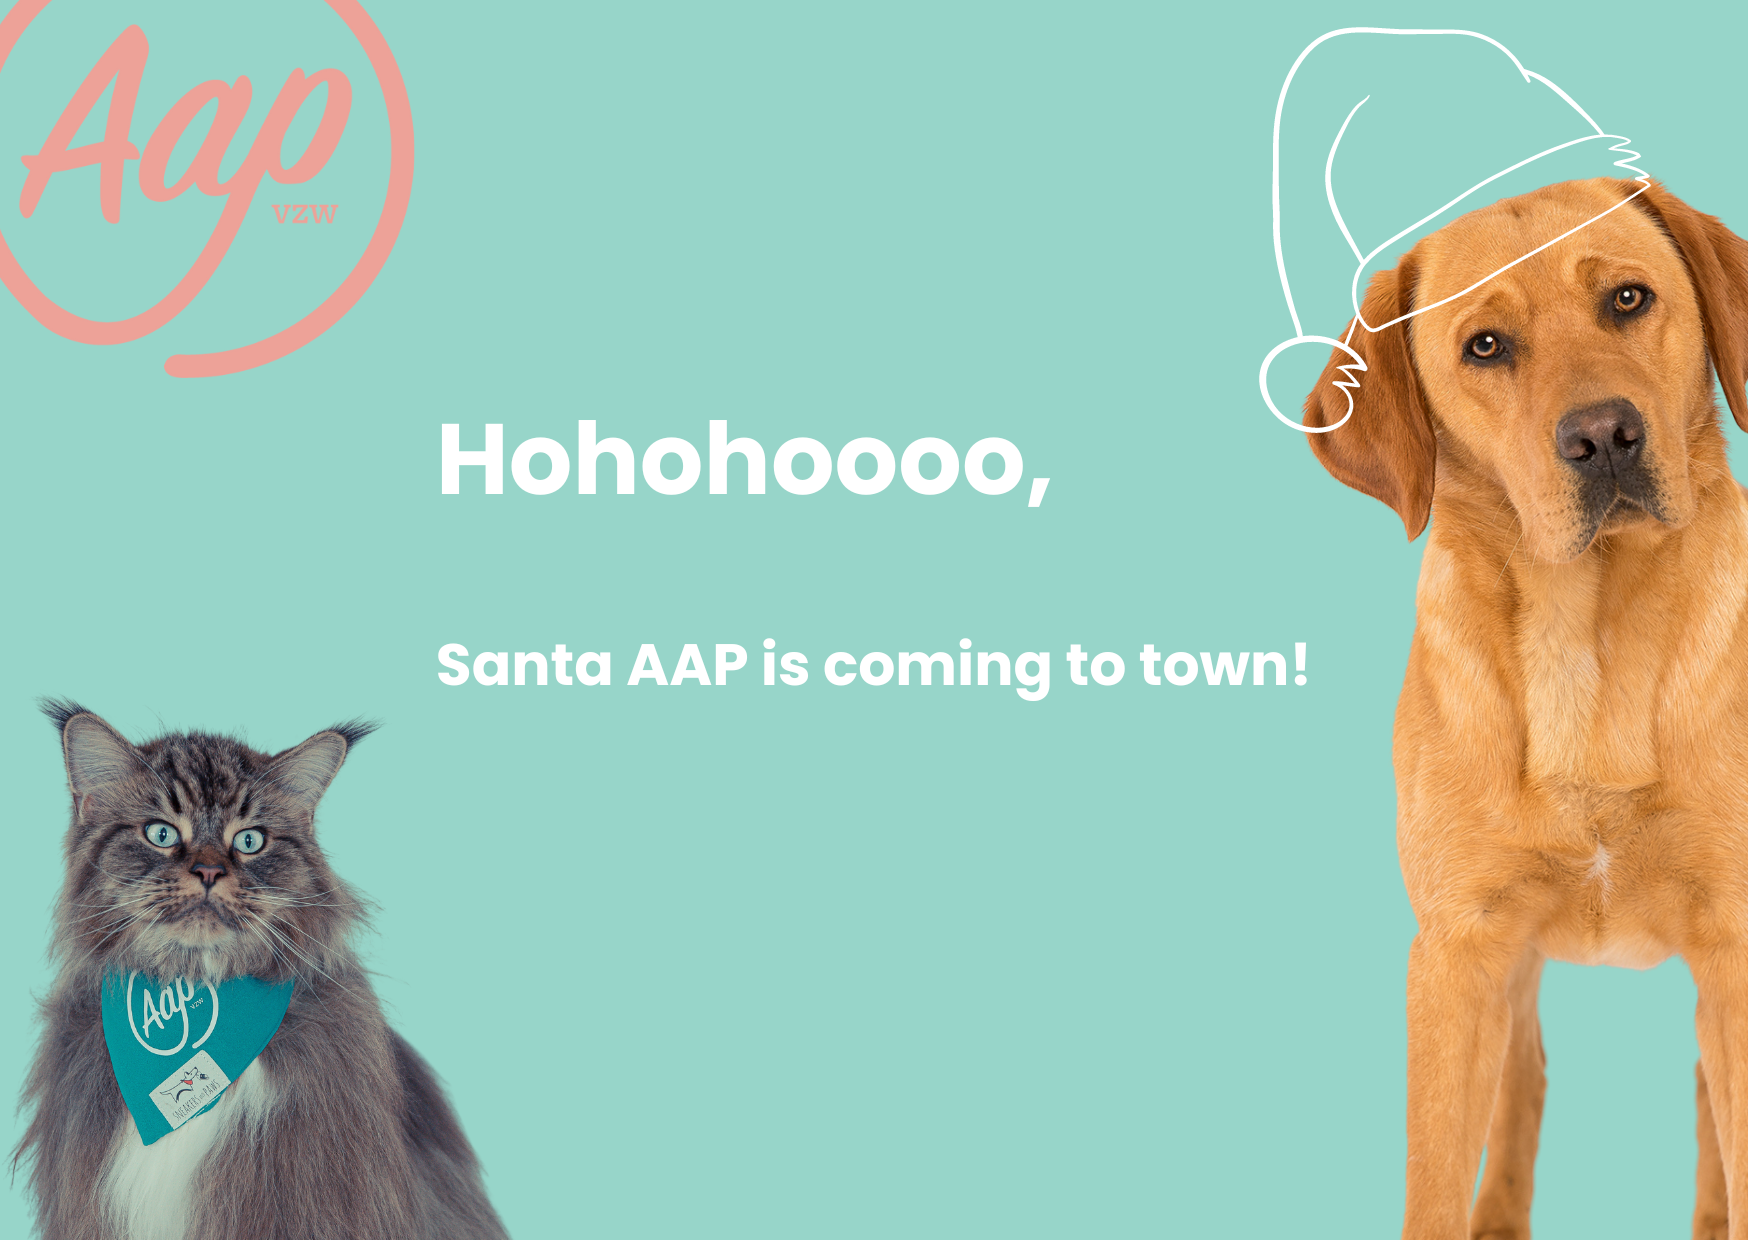 Hohohoooo, Santa AAP is coming to town!